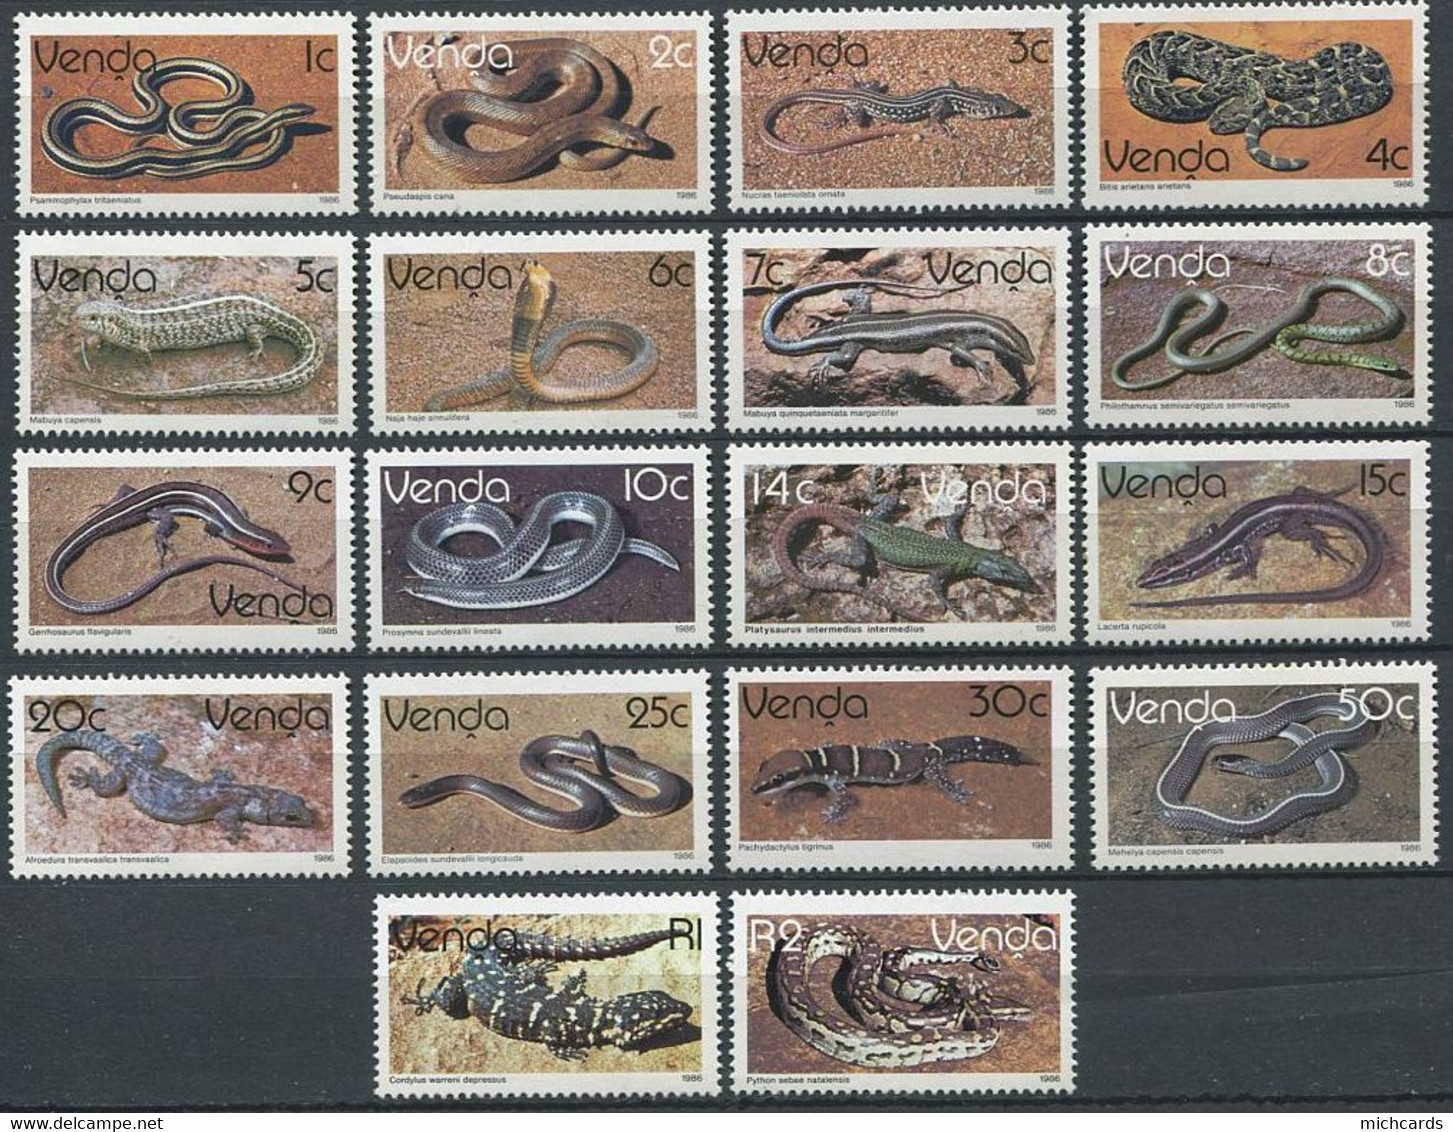 299 VENDA 1986 - Yvert  120/37 - Reptile Serpent - Neuf ** (MNH) Sans Charniere - Venda